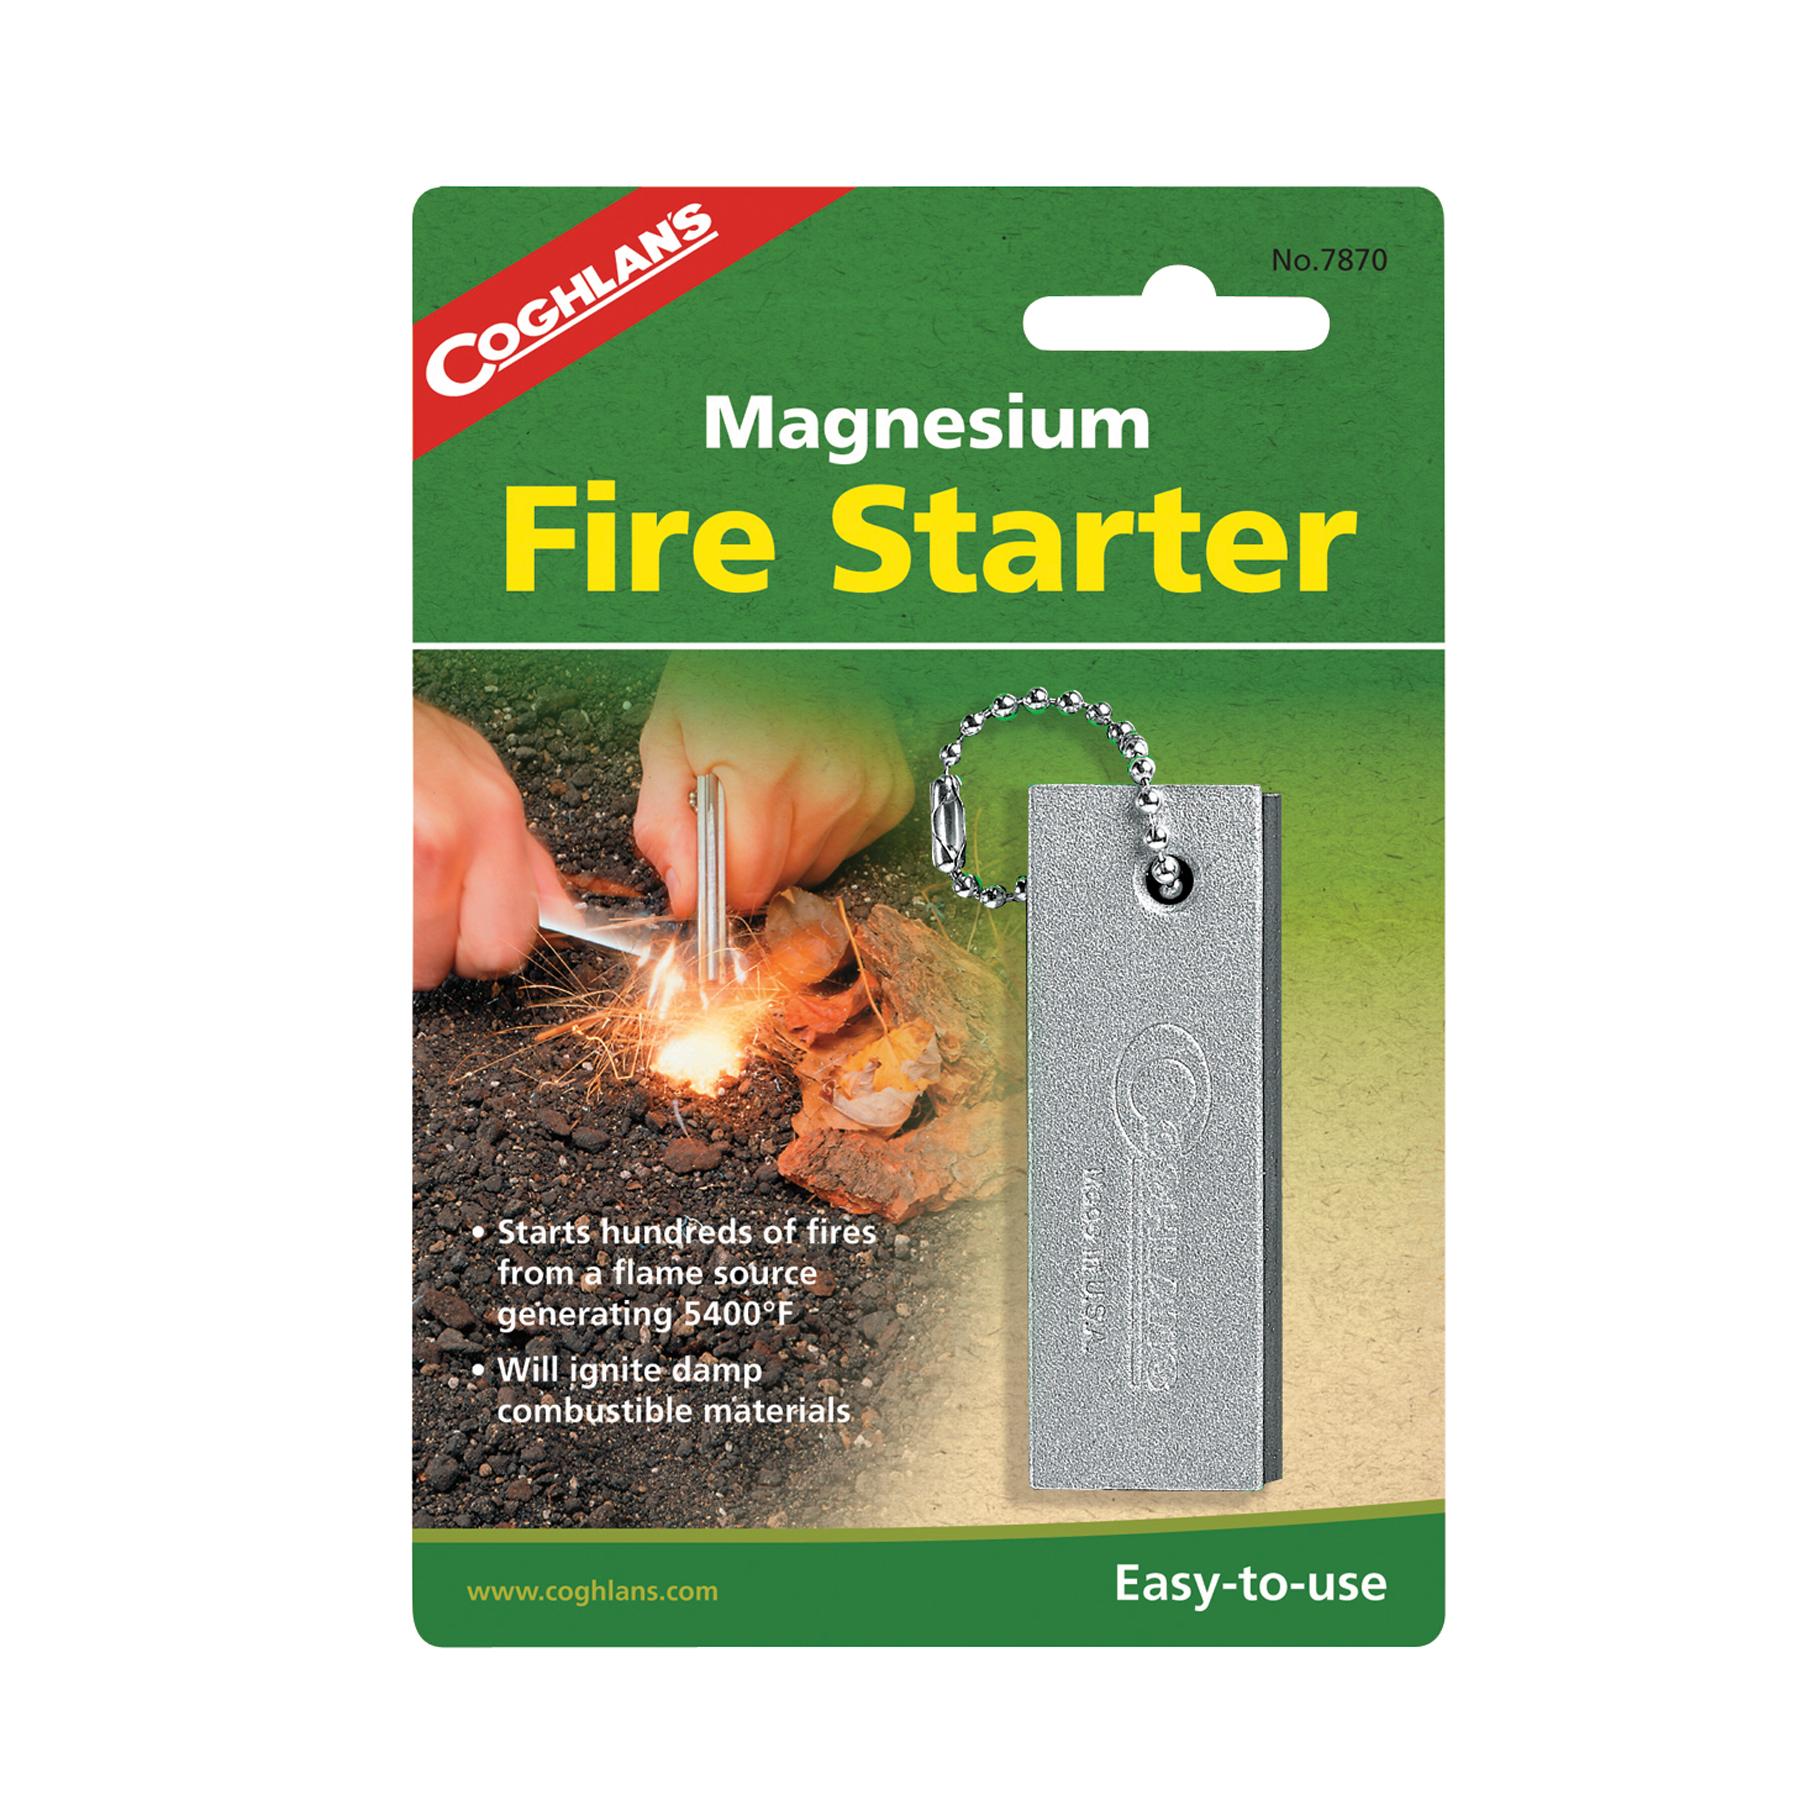  Magnesium Fire Starter